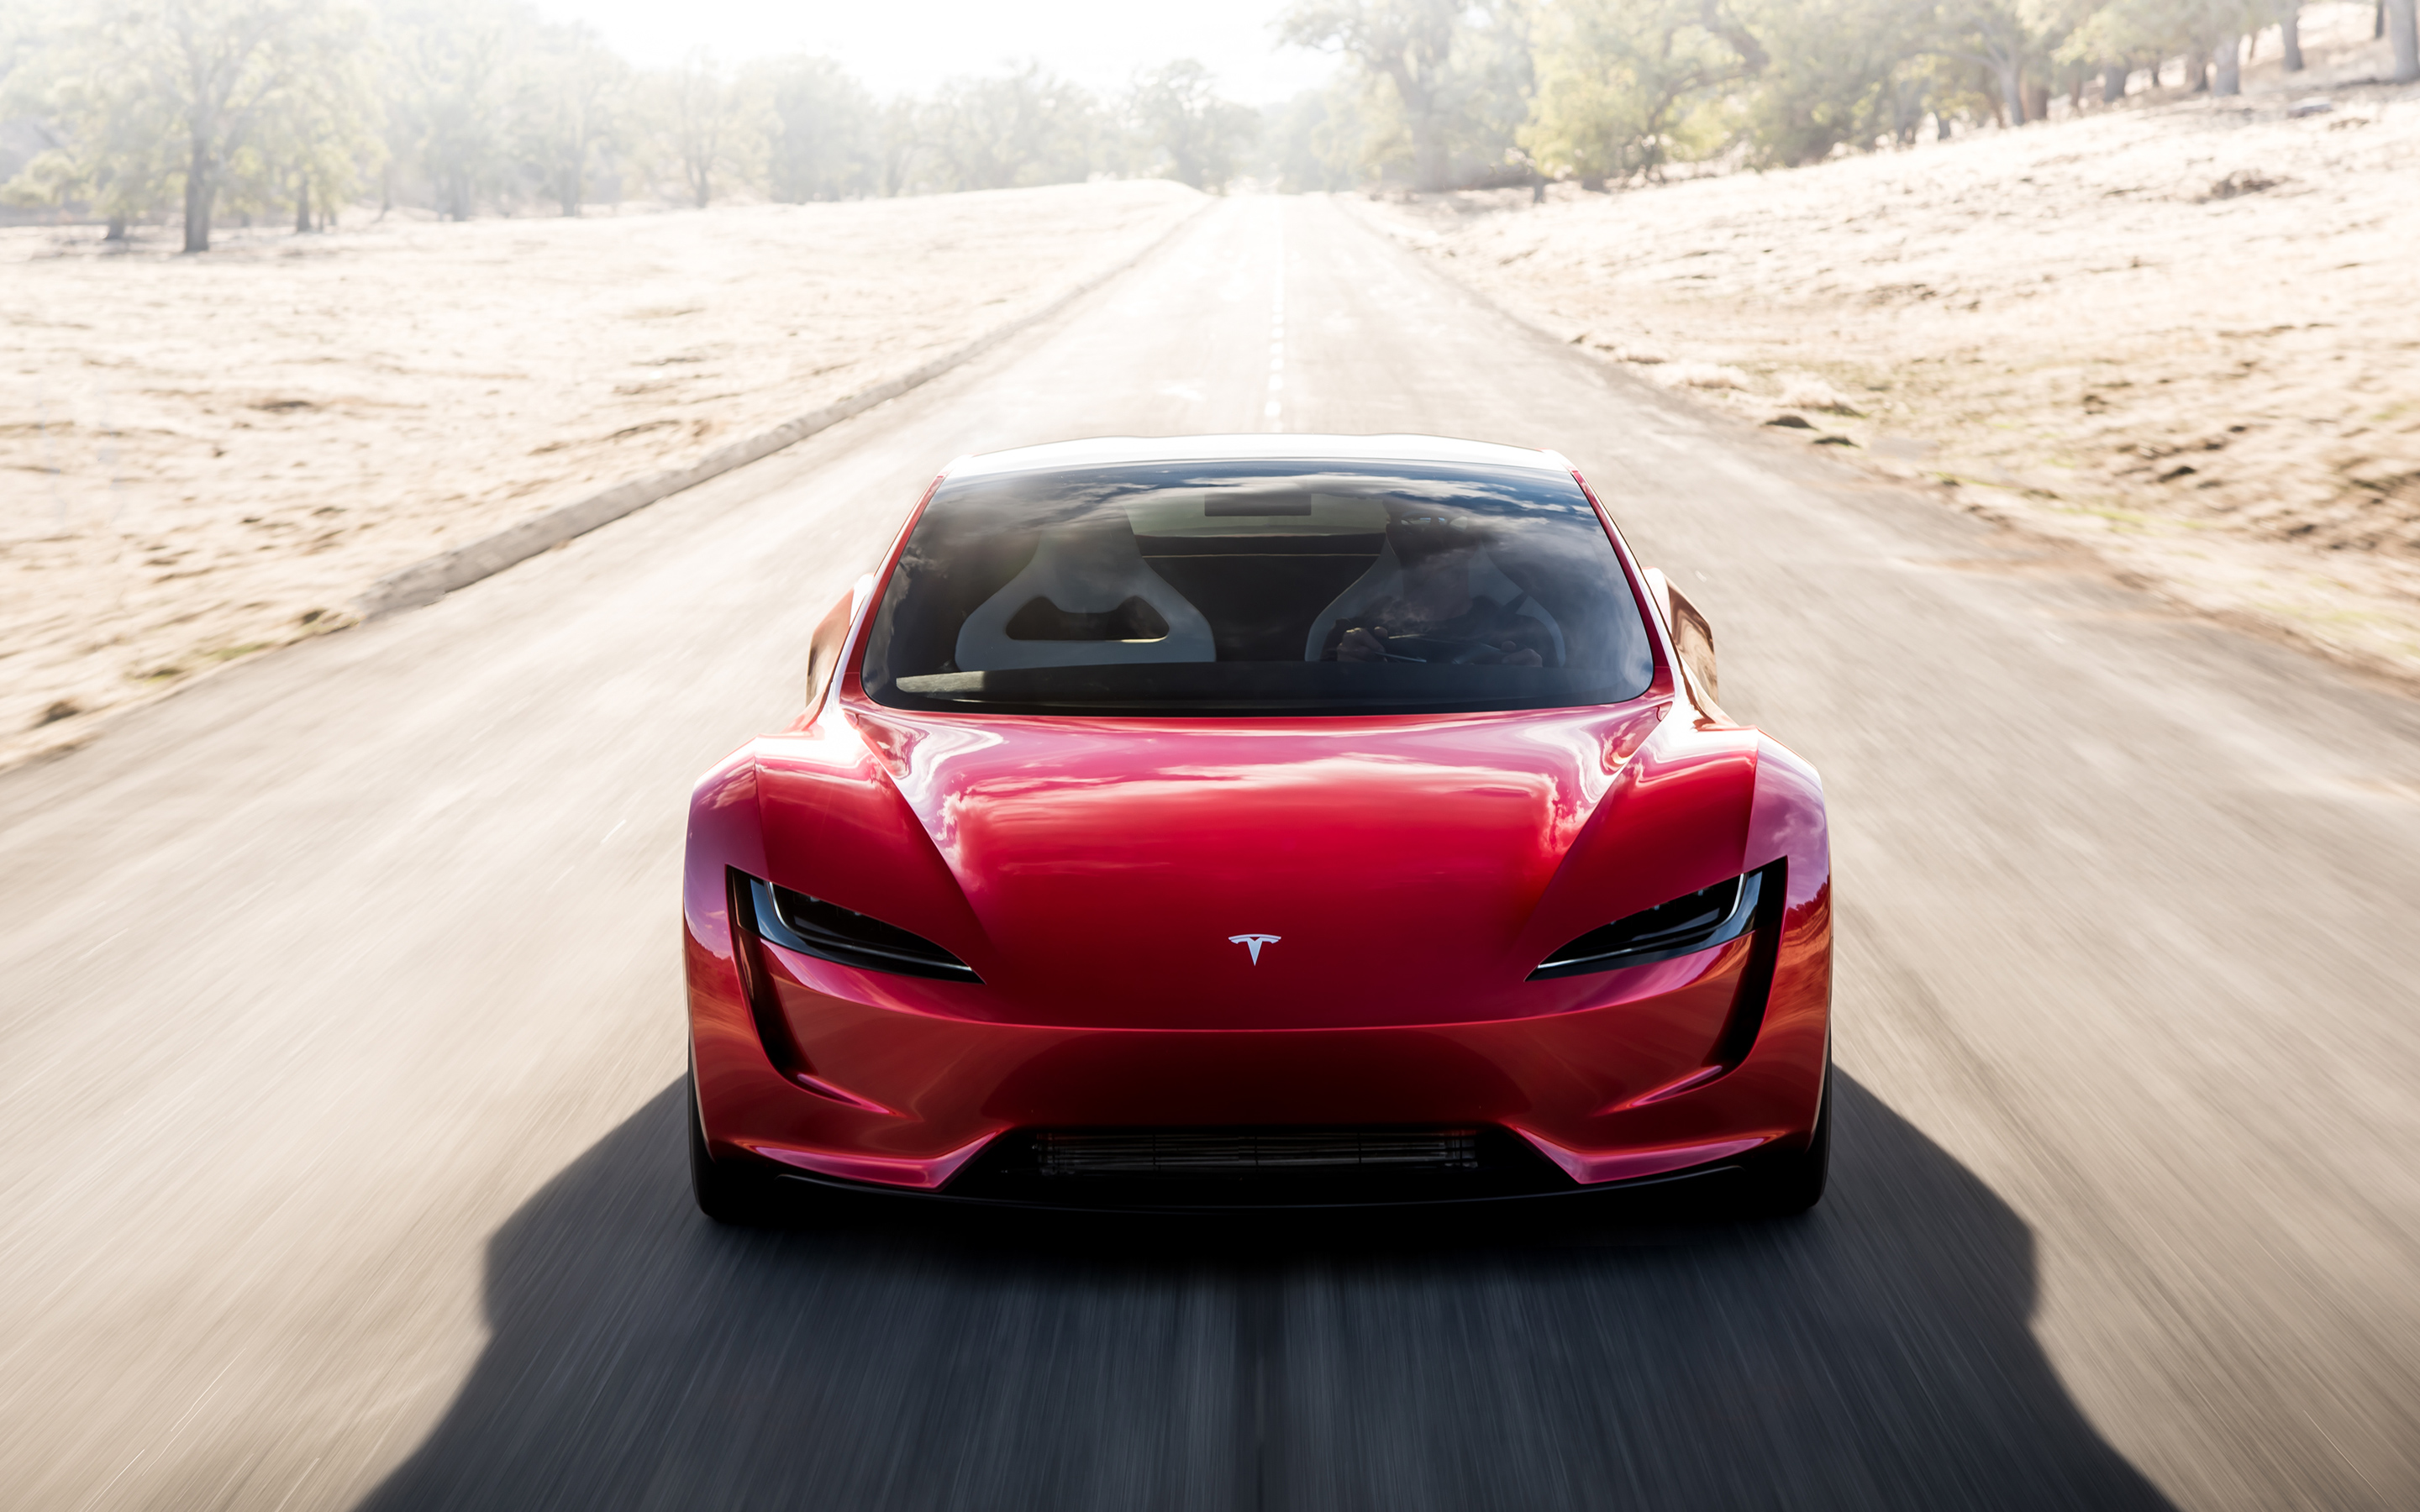 Tesla Roadster Wallpapers and Background Images   stmednet